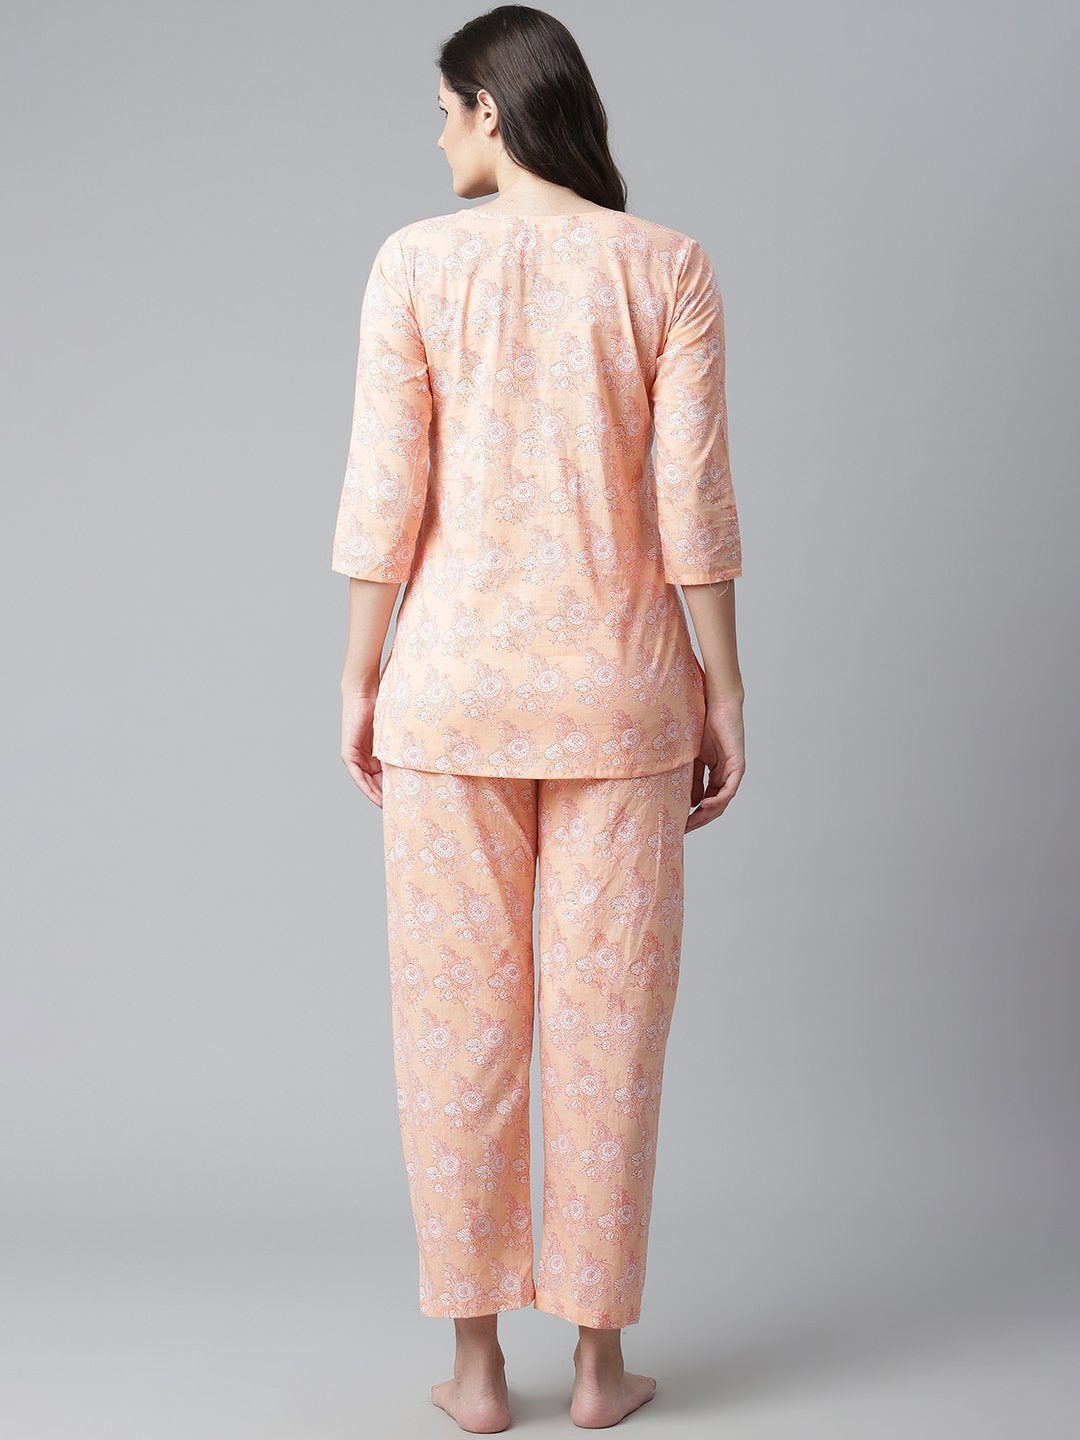 Women's Peach Printed Cotton Nightwear - Divena